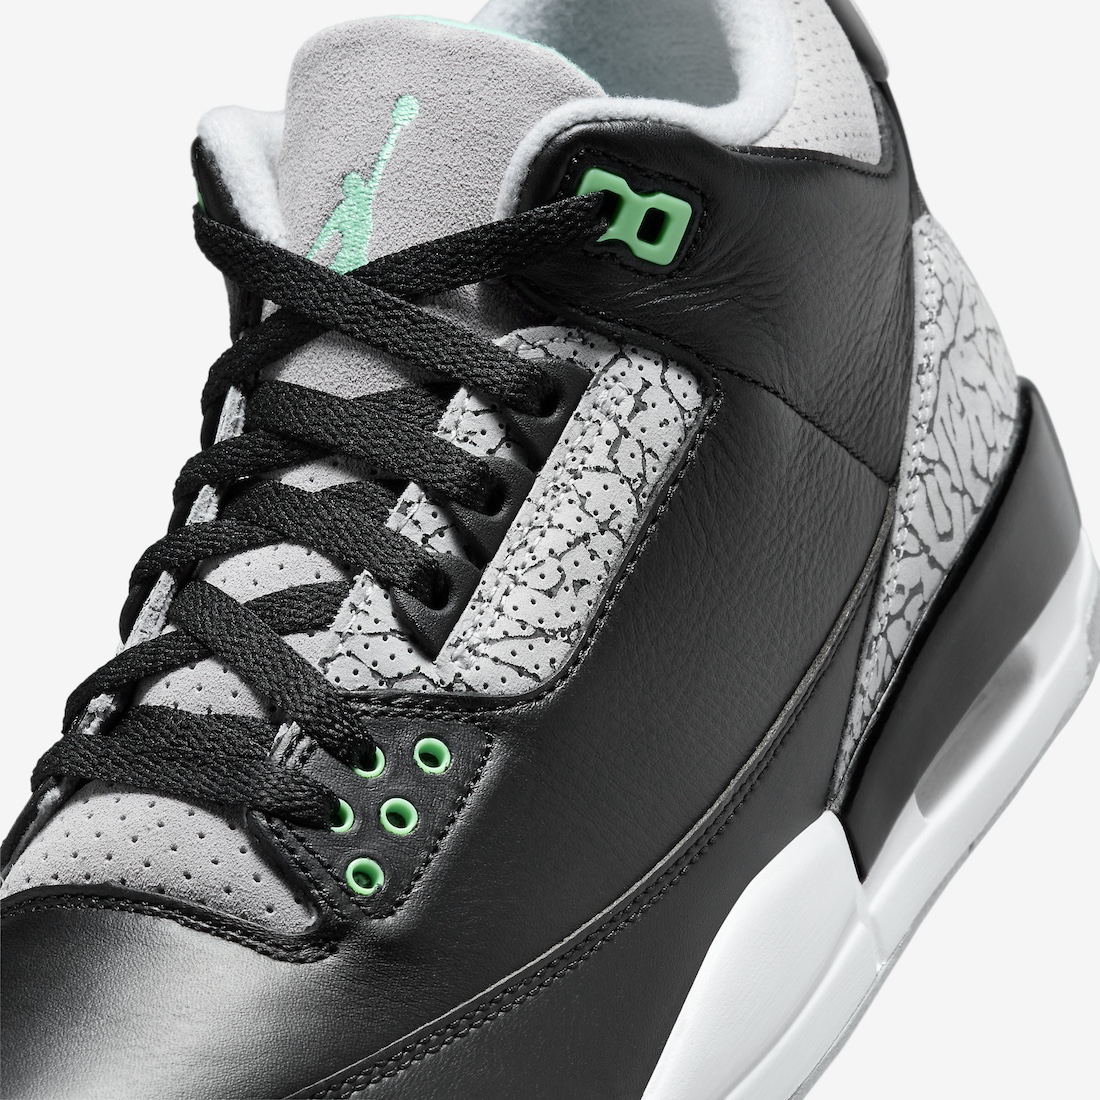 Official Look At The Air Jordan 3 Retro “Green Glow”